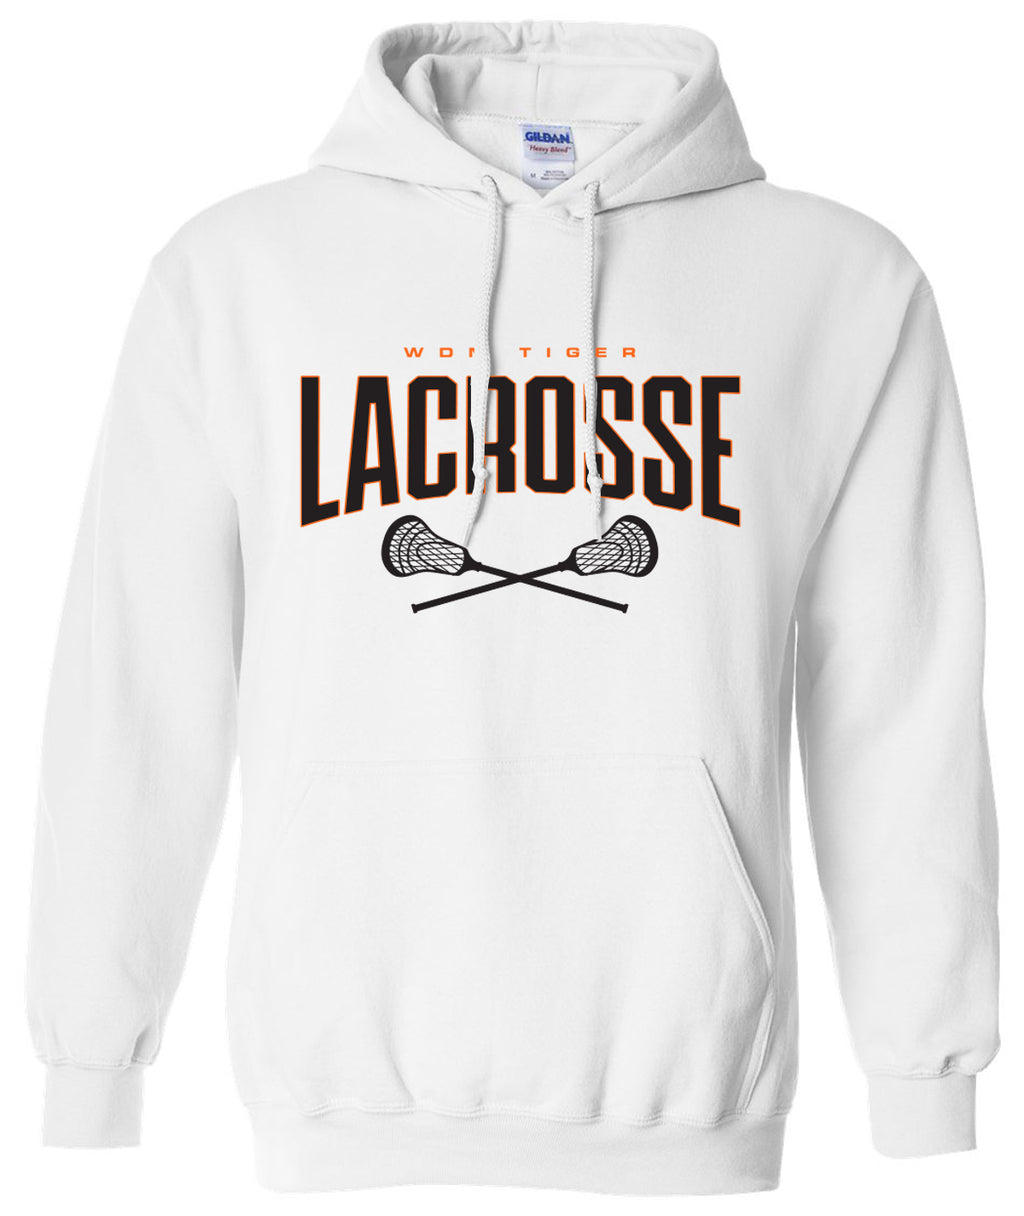 WDM Tiger Lacrosse Hooded Sweatshirt